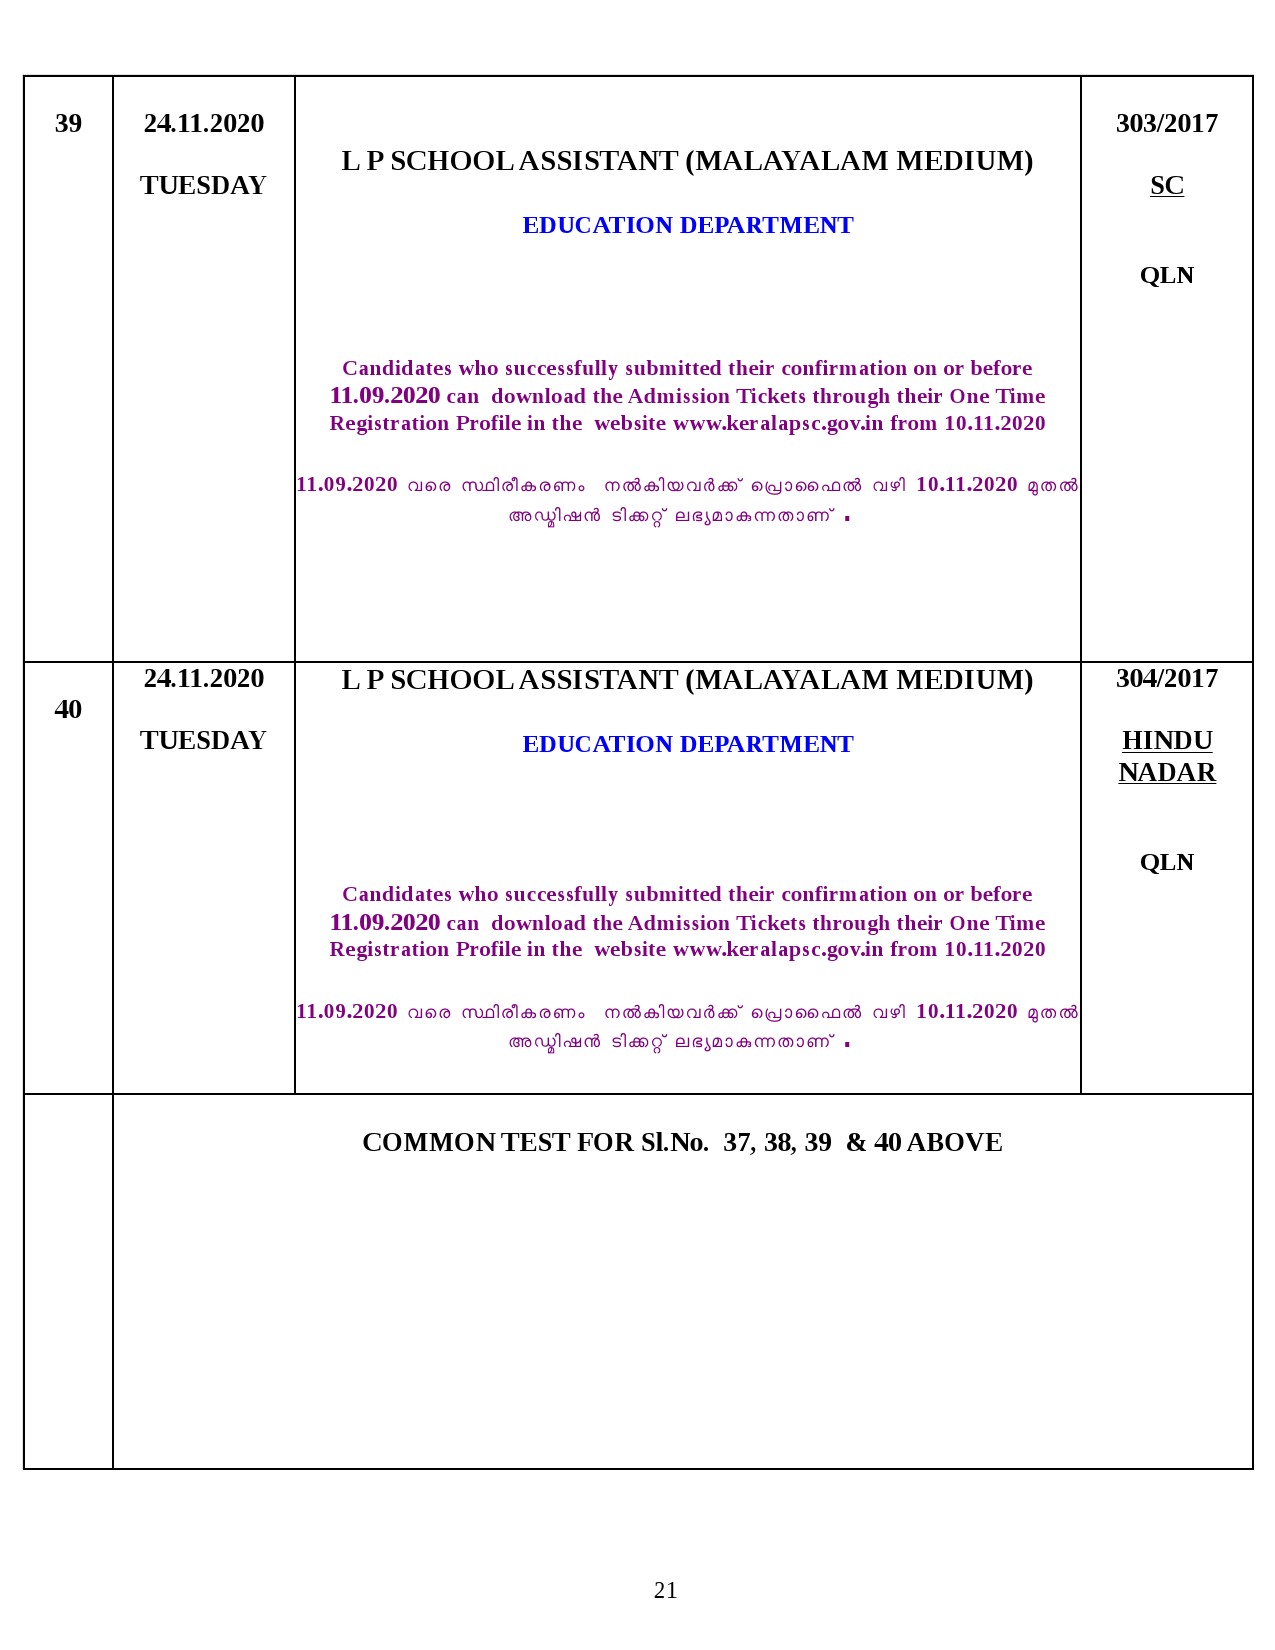 Kerala PSC Final Exam Schedule for November 2020 - Notification Image 21